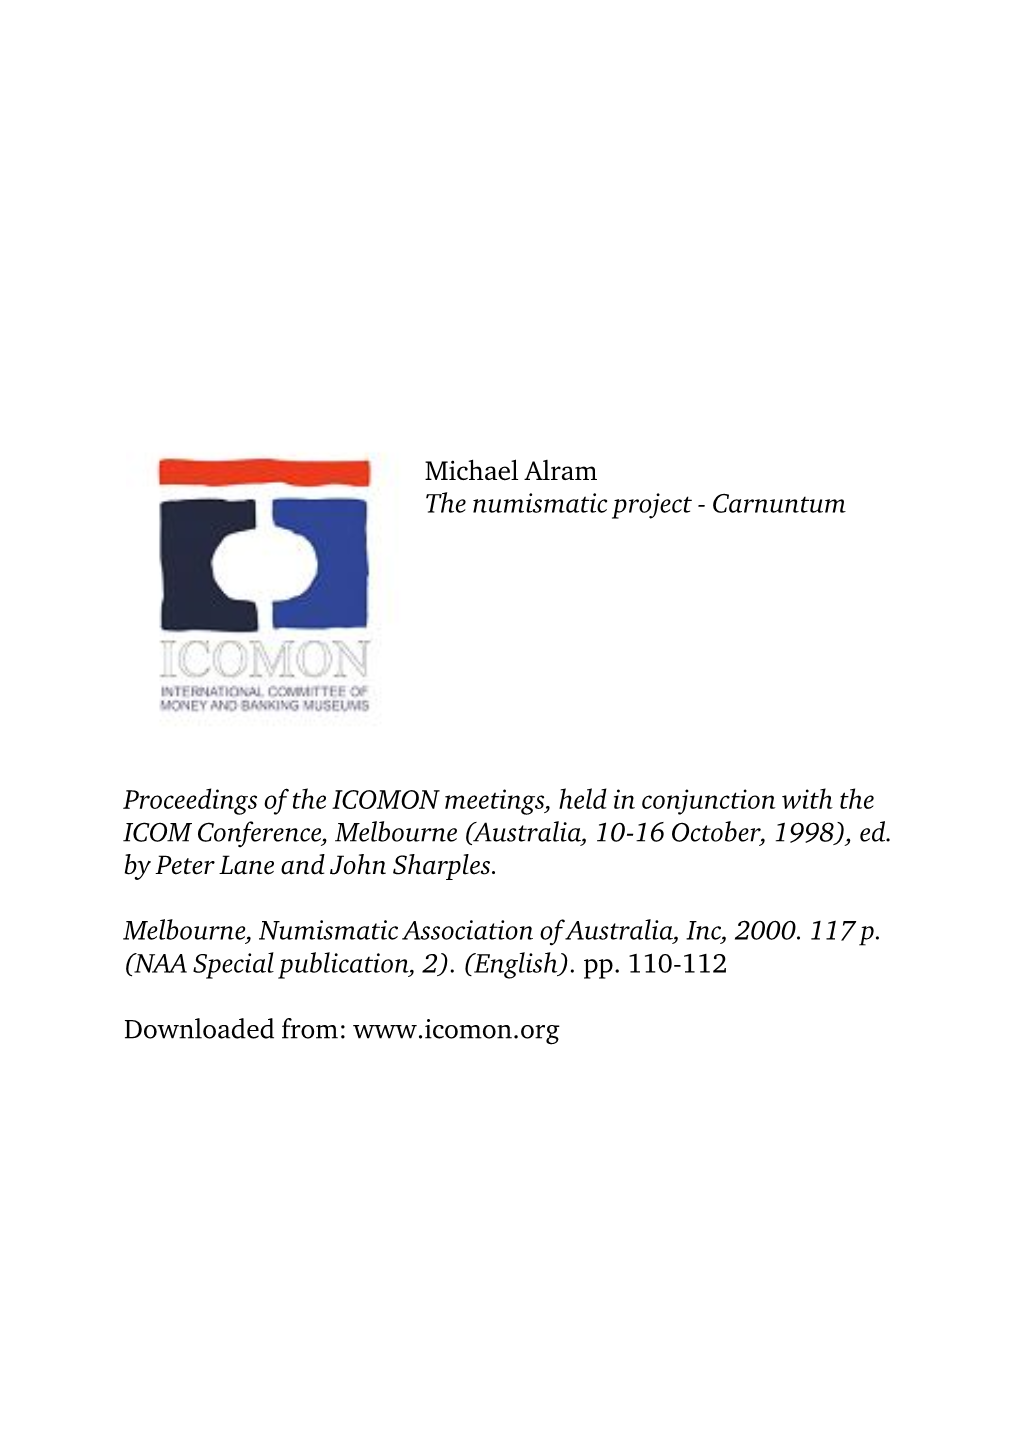 Michael Alram the Numismatic Project - Carnuntum